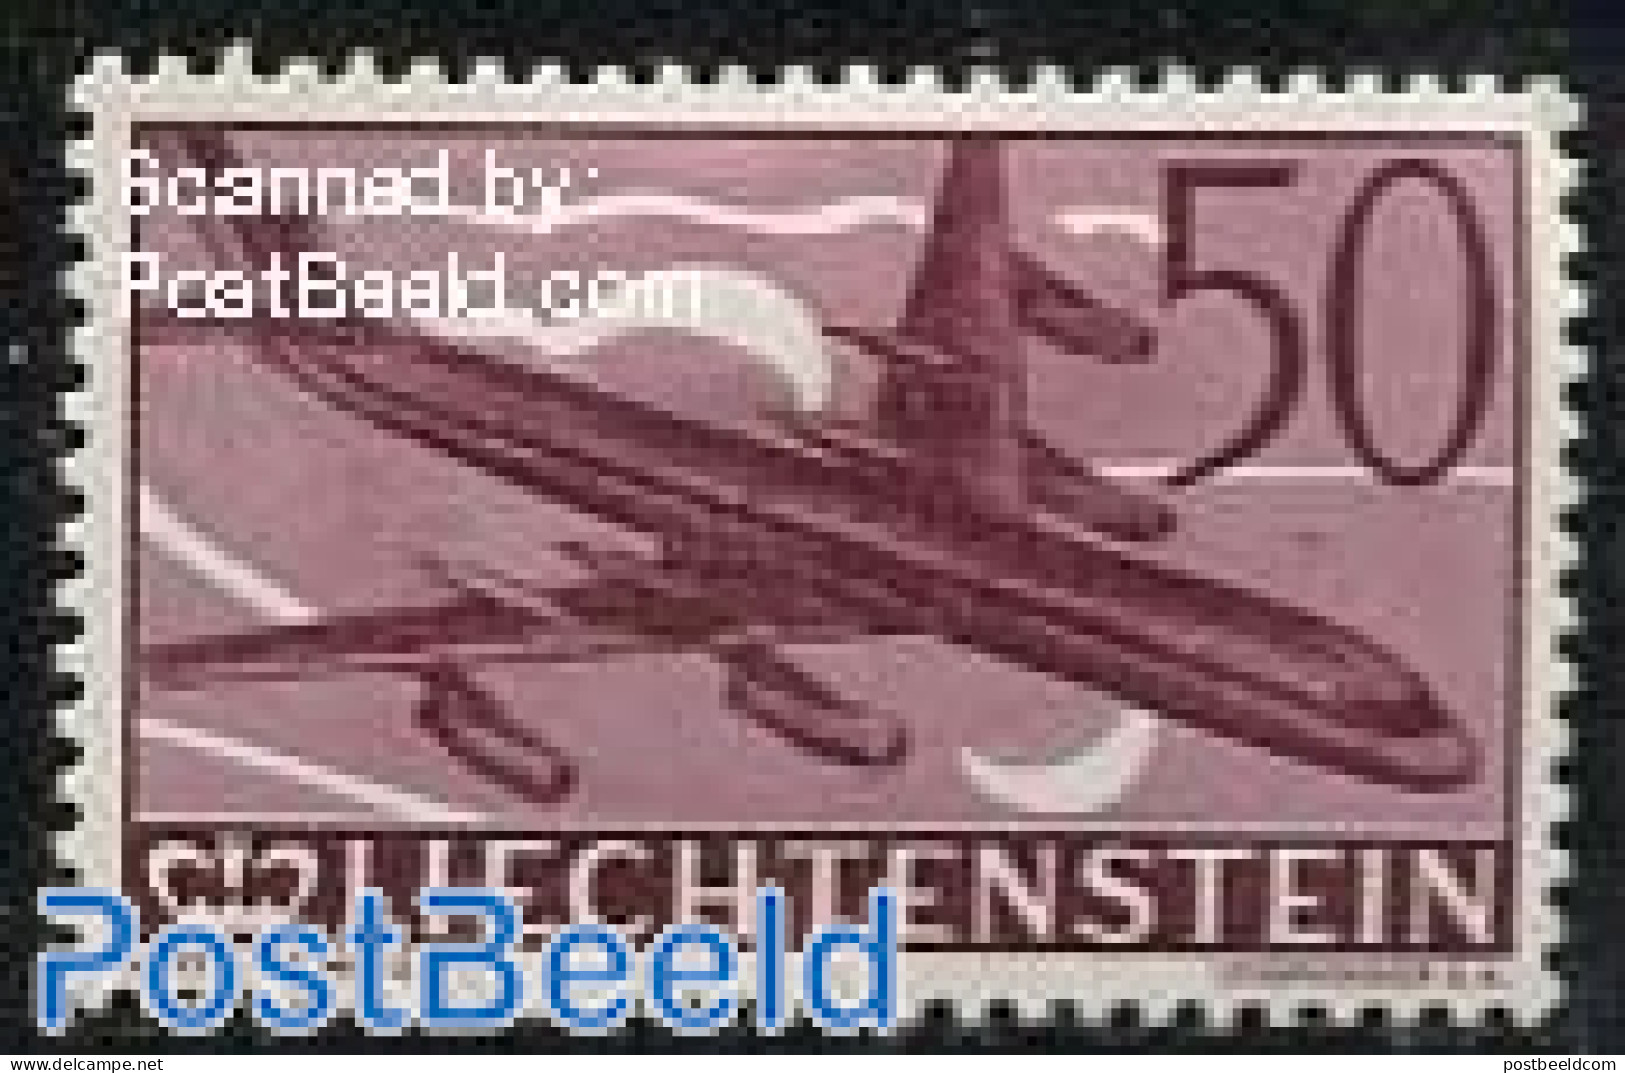 Liechtenstein 1960 50Rp, Stamp Out Of Set, Unused (hinged), Transport - Aircraft & Aviation - Ongebruikt